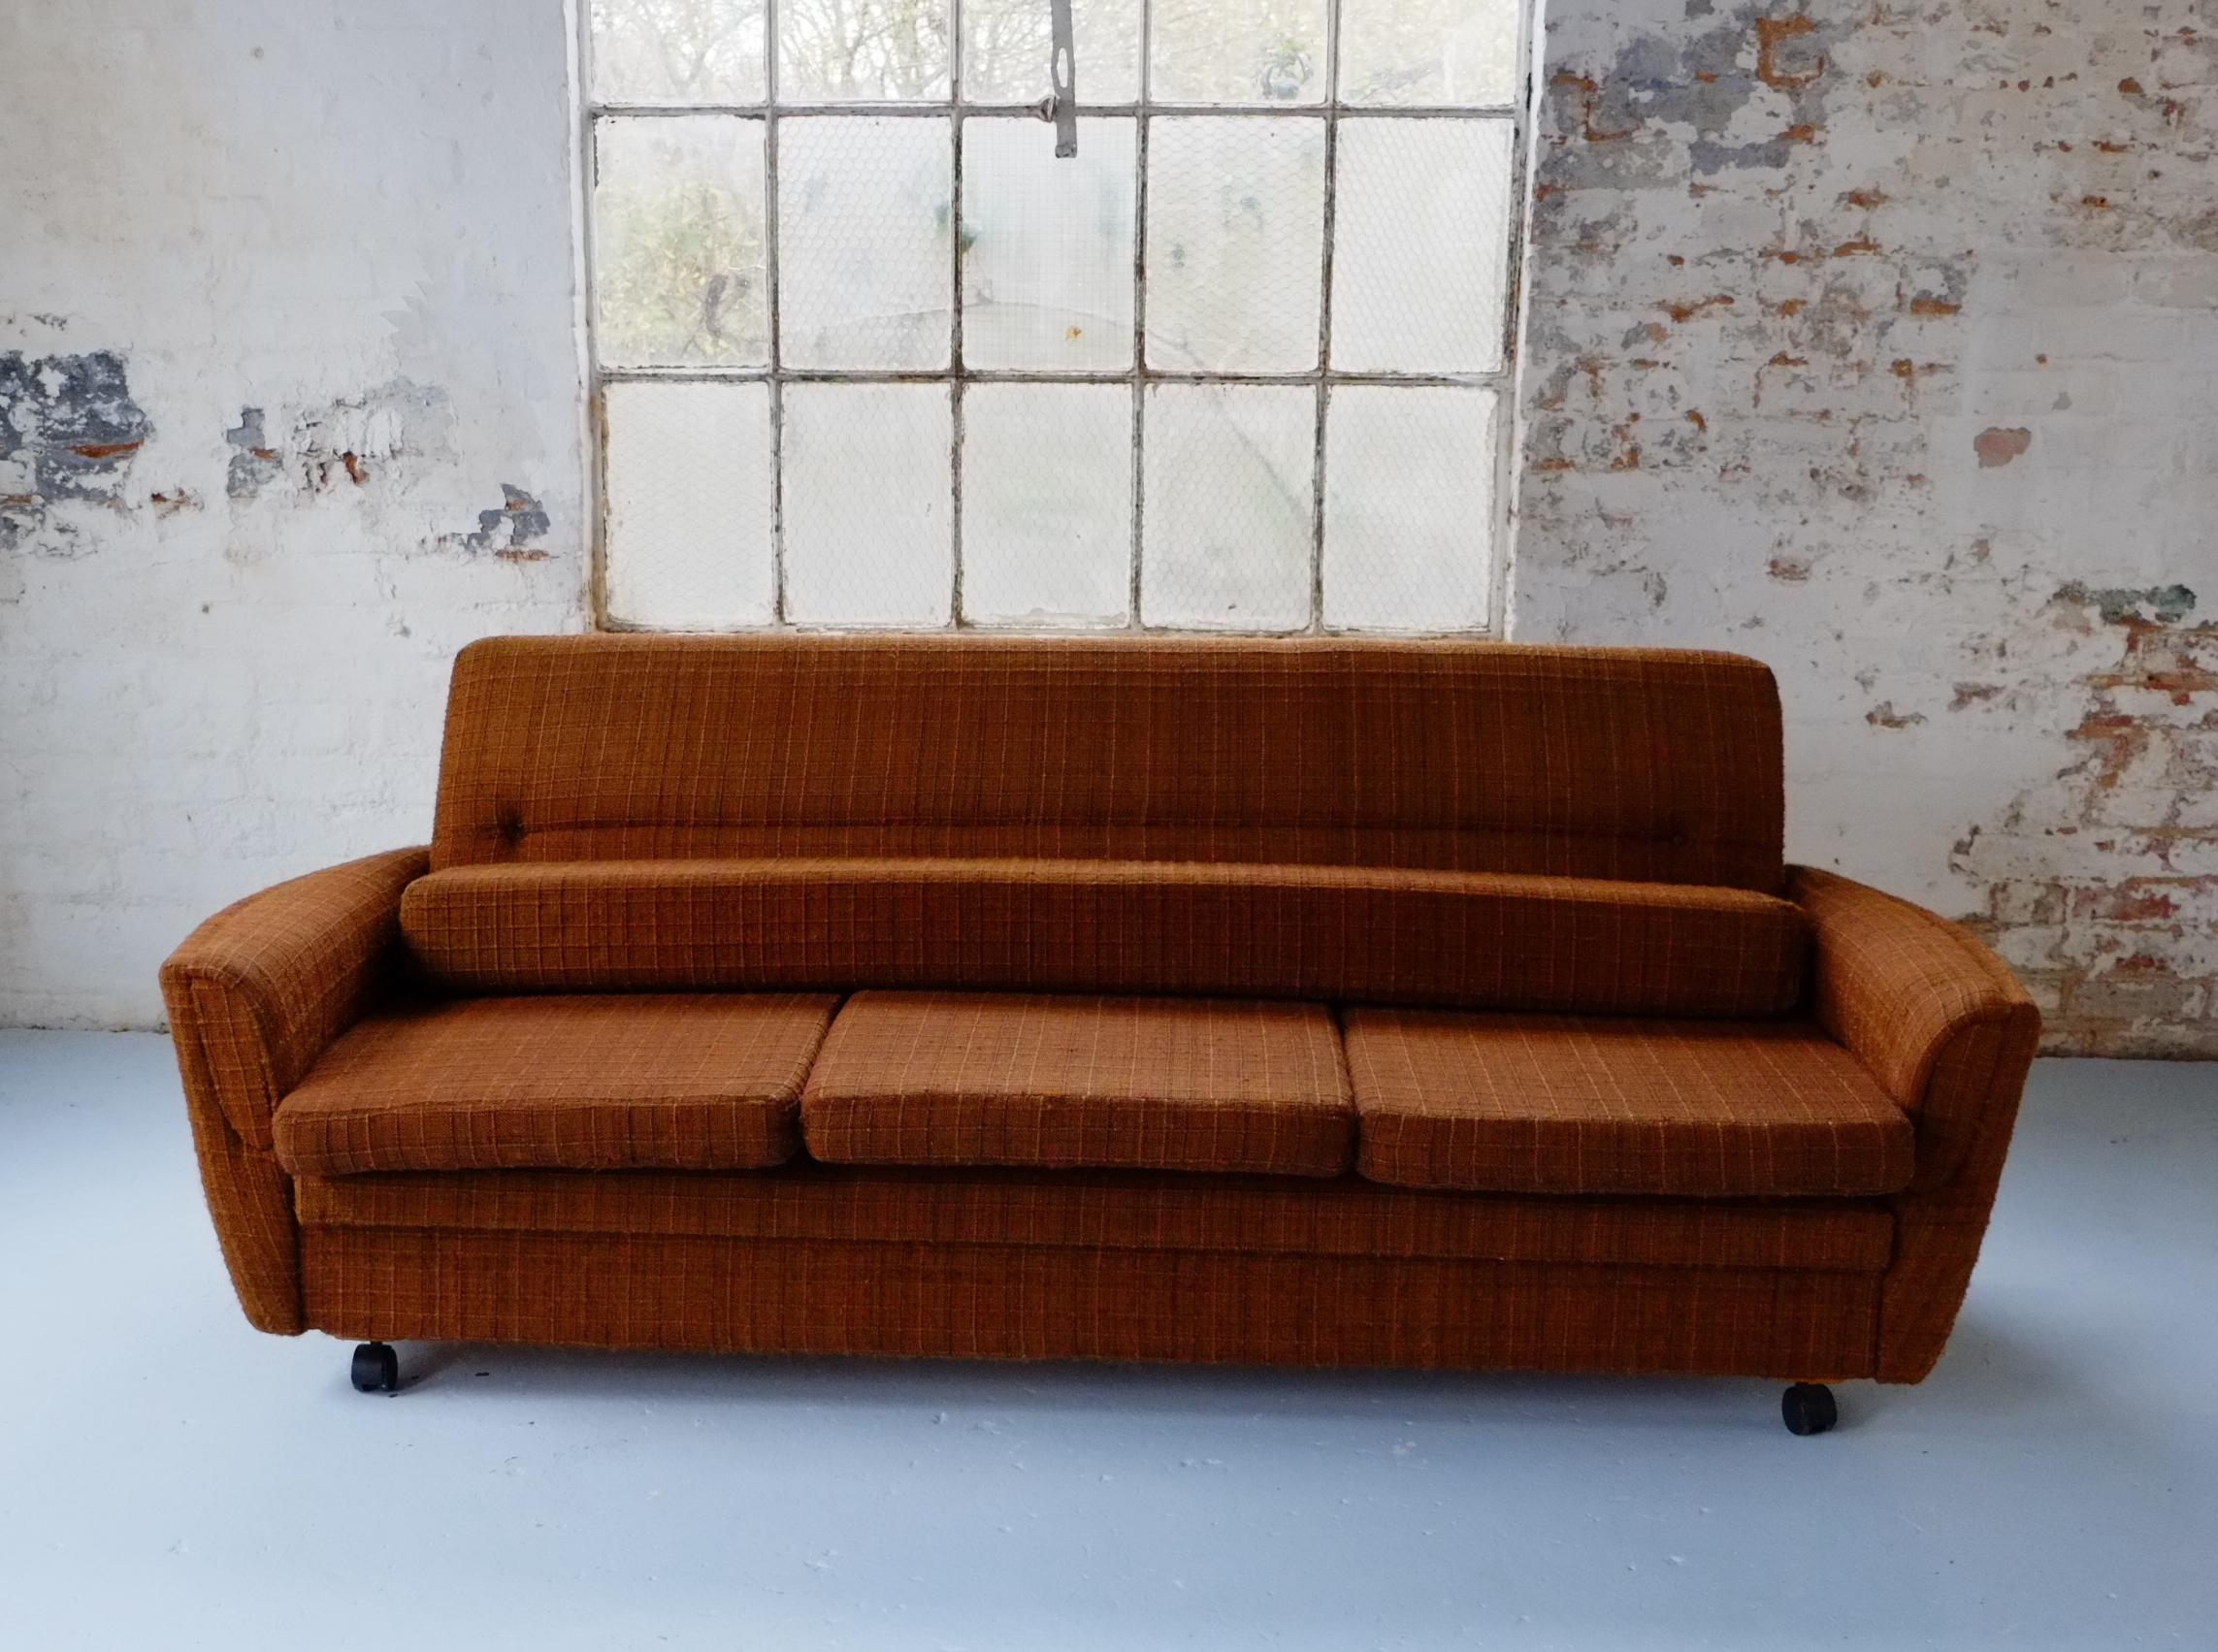 Classic 70's Vintage British Brown Sofa Bed Settee on Castors 5